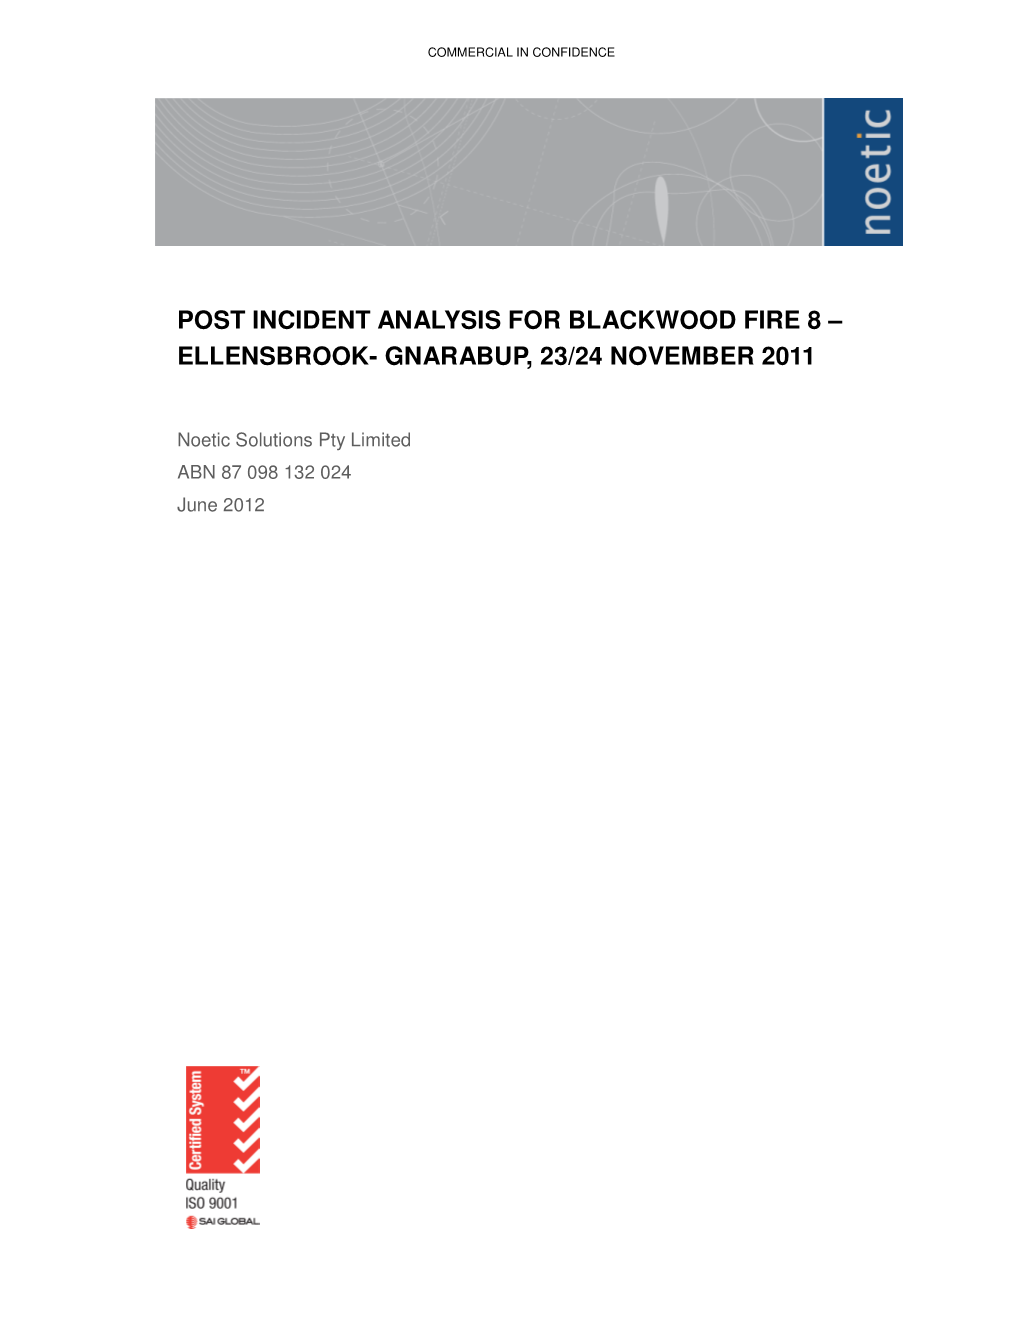 Post Incident Analysis for Blackwood Fire 8 – Ellensbrook- Gnarabup, 23/24 November 2011